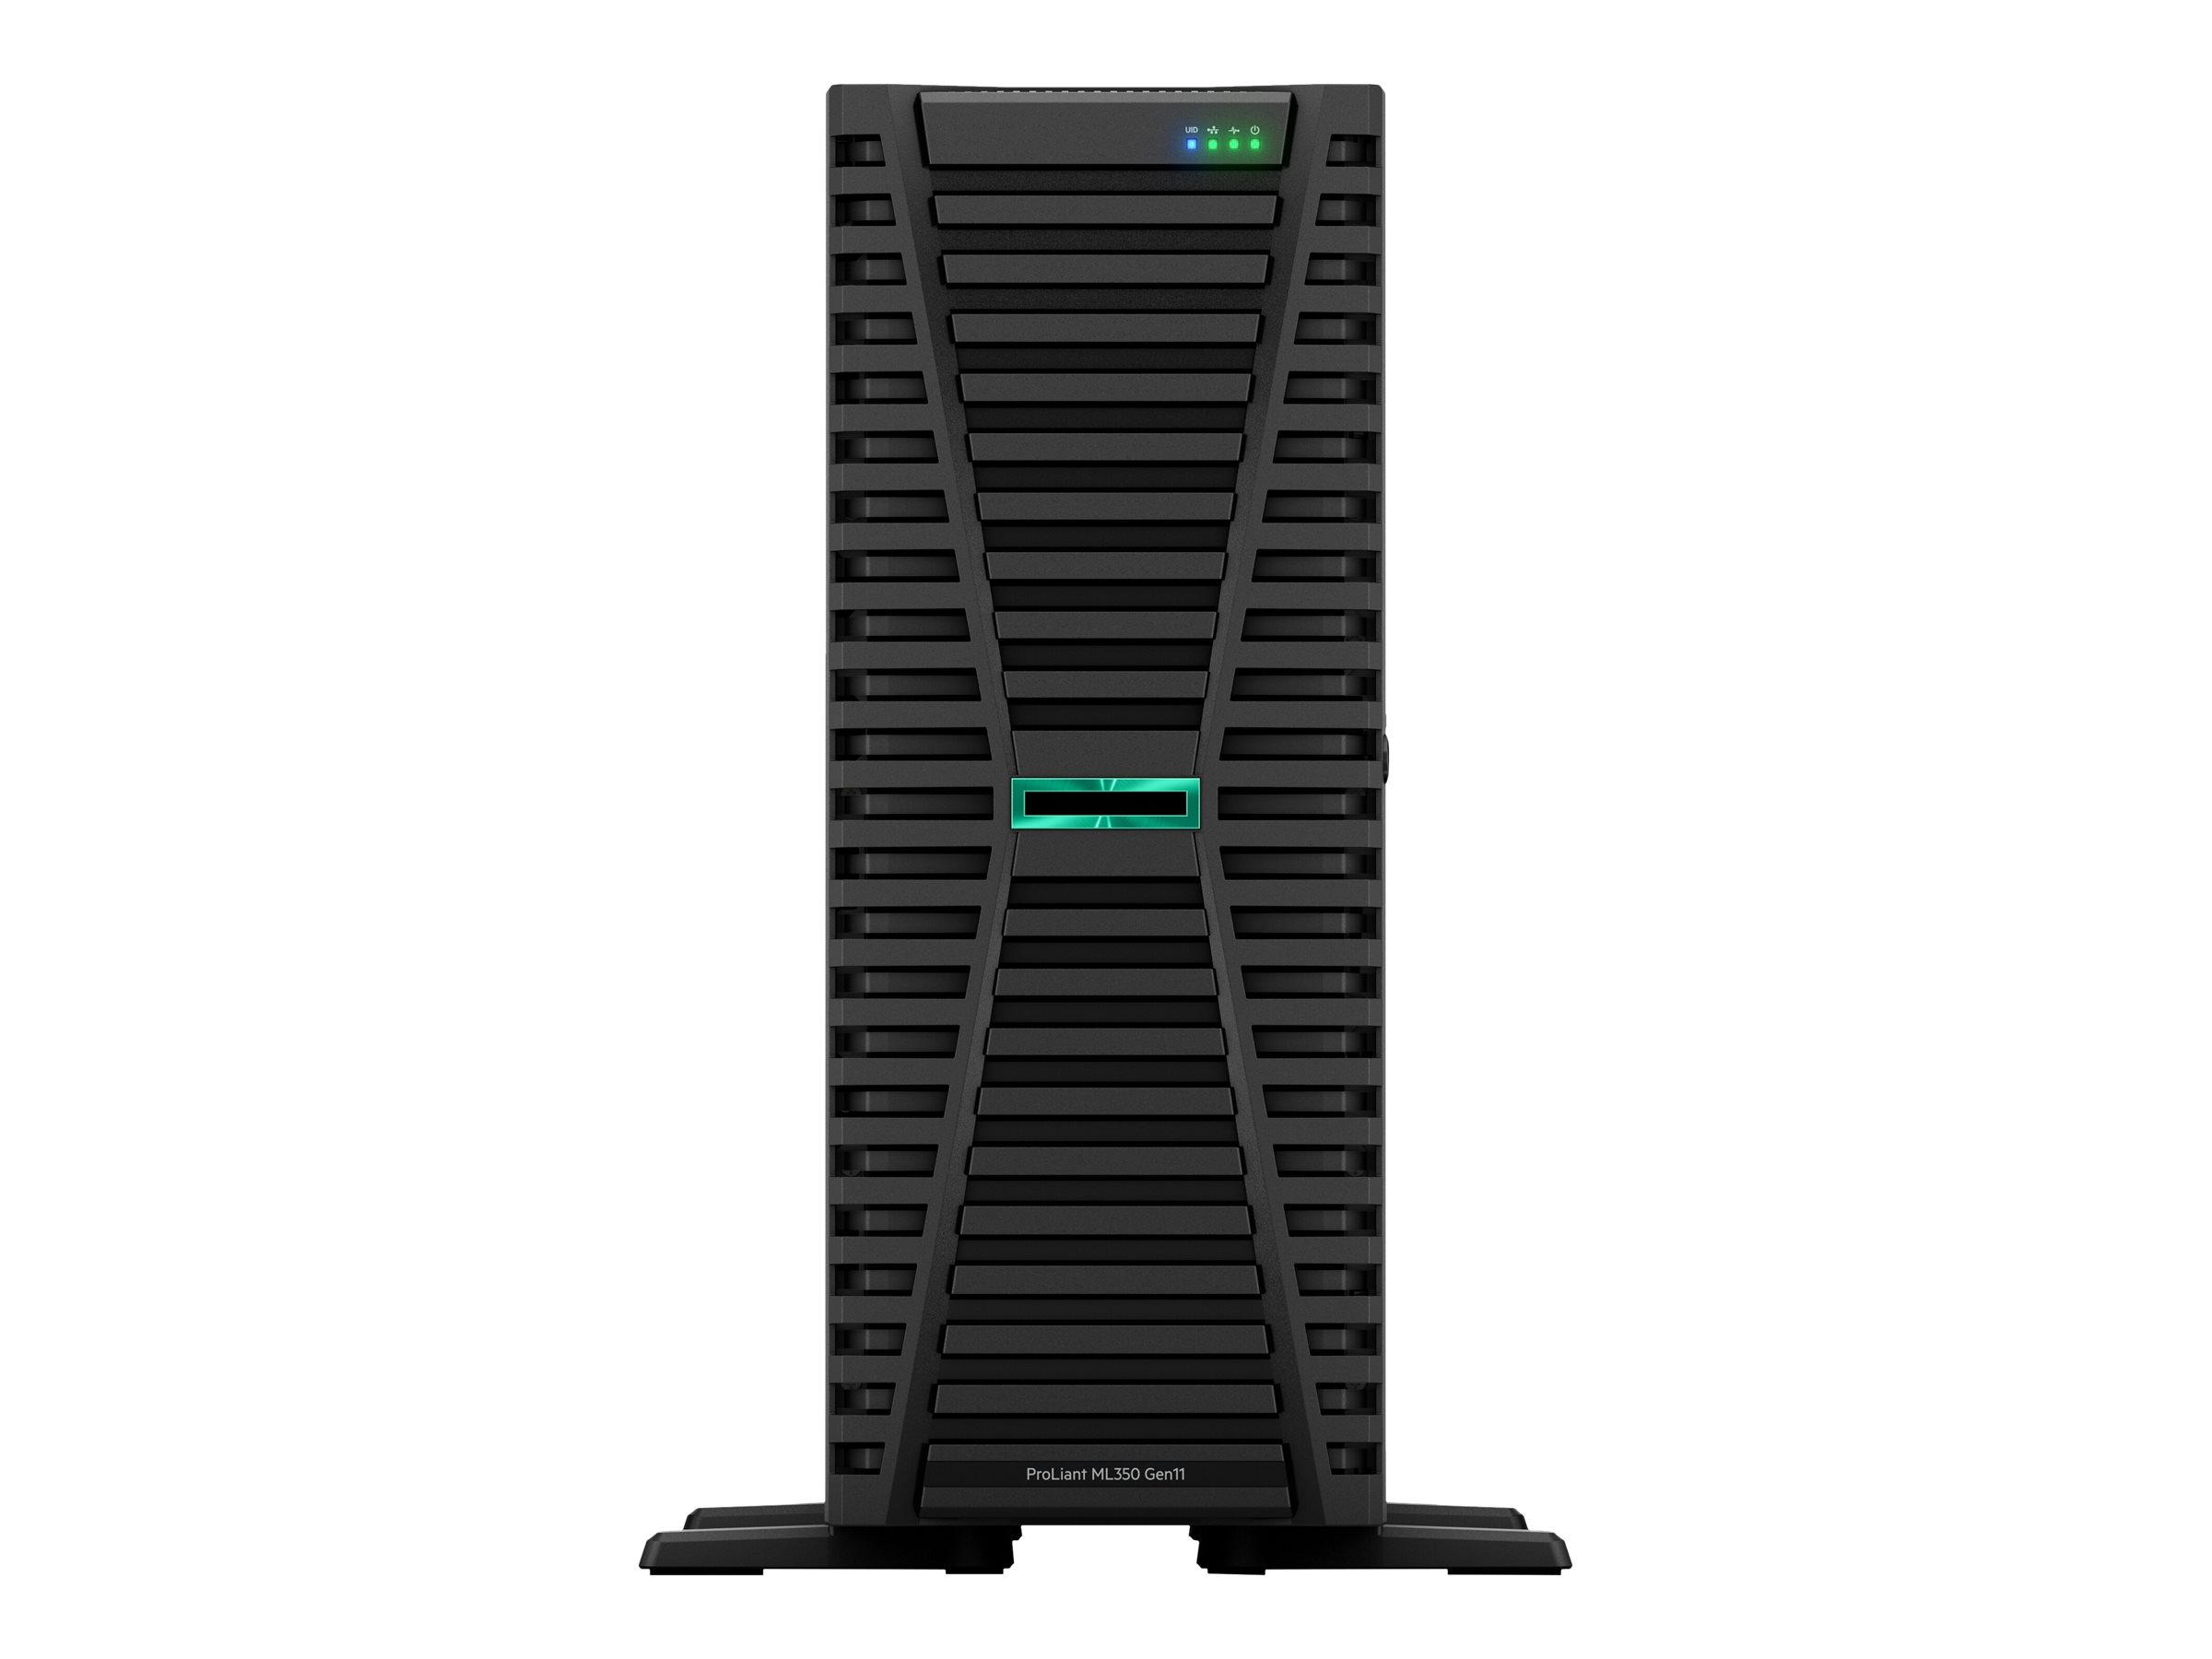 HPE ProLiant ML350 Gen11 Higher Performance - Server - Tower - 4U - zweiweg - 1 x Xeon Gold 5418Y / 2 GHz